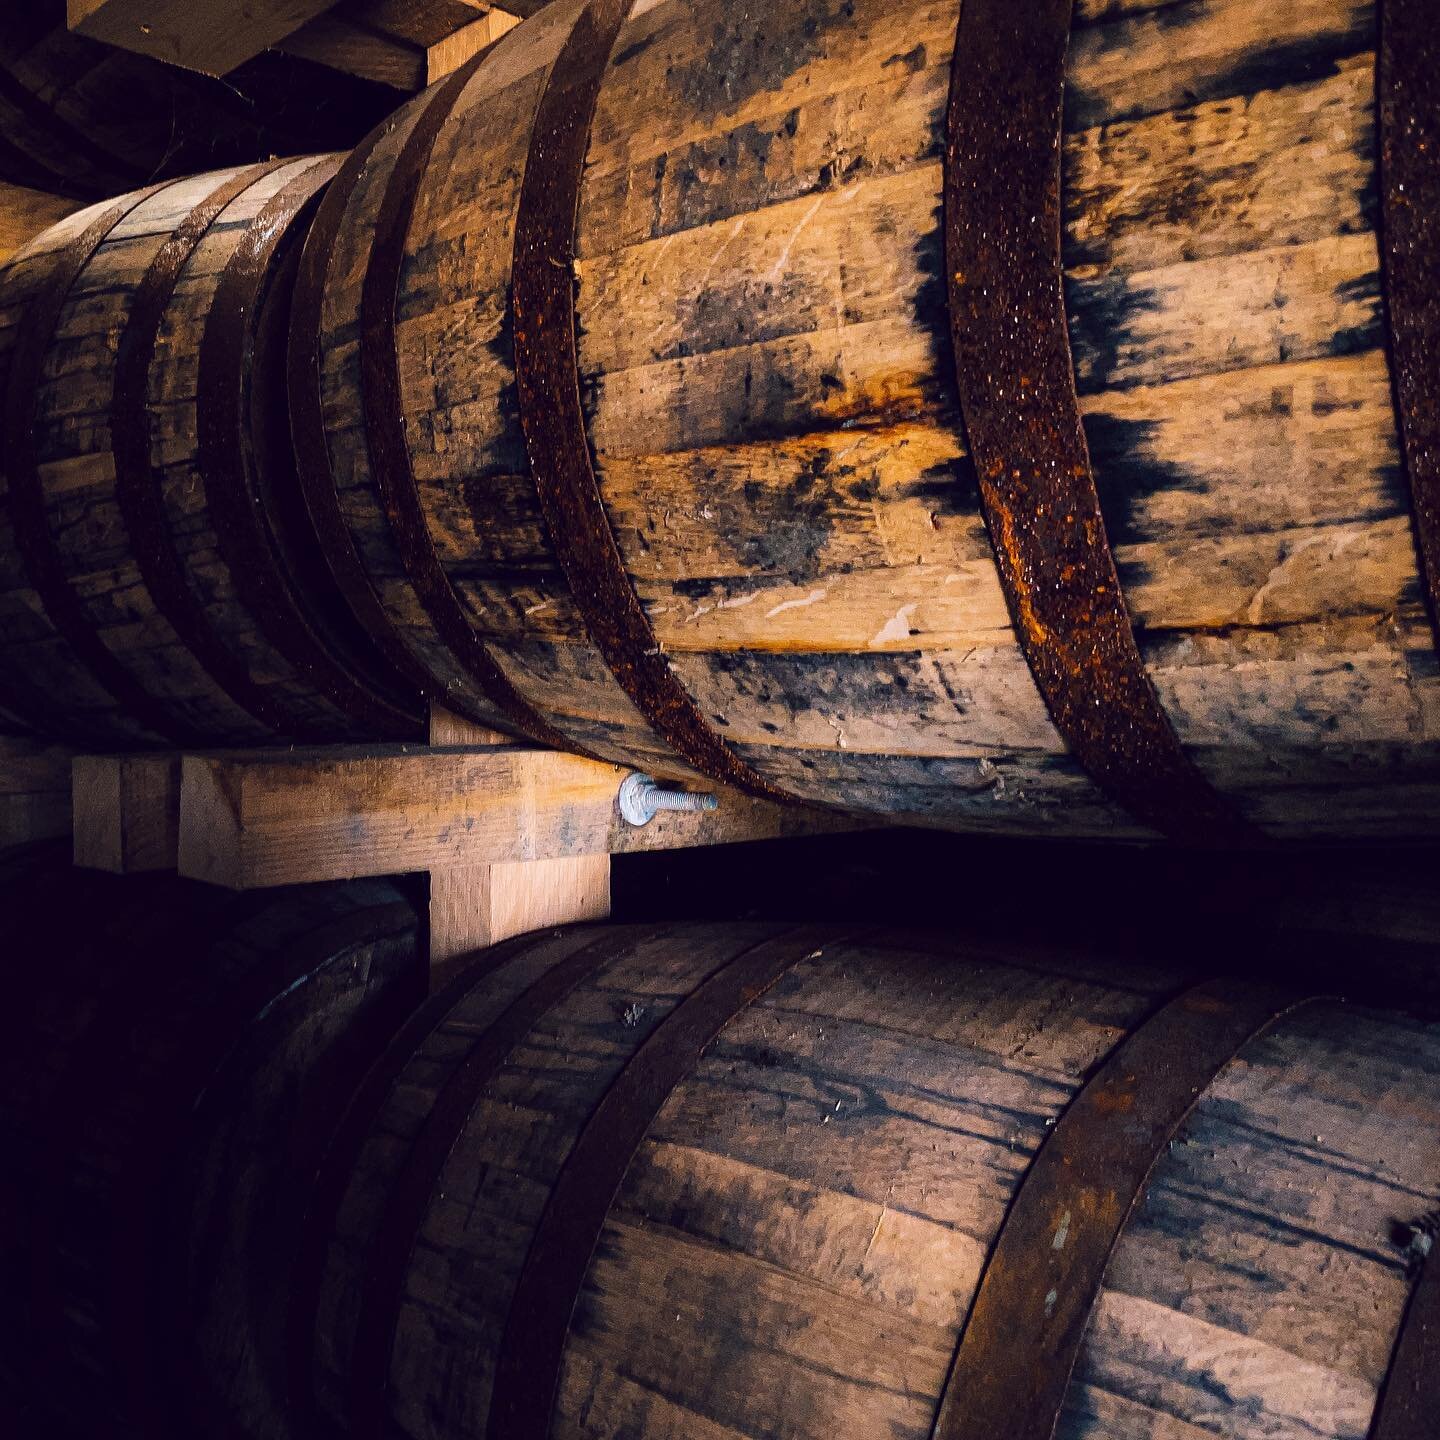 The sweet sweet smell of aging
&bull;
&bull;
&bull;
&bull;
#craftbourbon #craftdistillery #corn #bloodybutcher #bloodybutchercorn #handcrafted #illinoiswhiskey #craft #whiskey #bourbon #wood #barrels #handmade #hamdcraftedfromthegroundup #craftwhiske